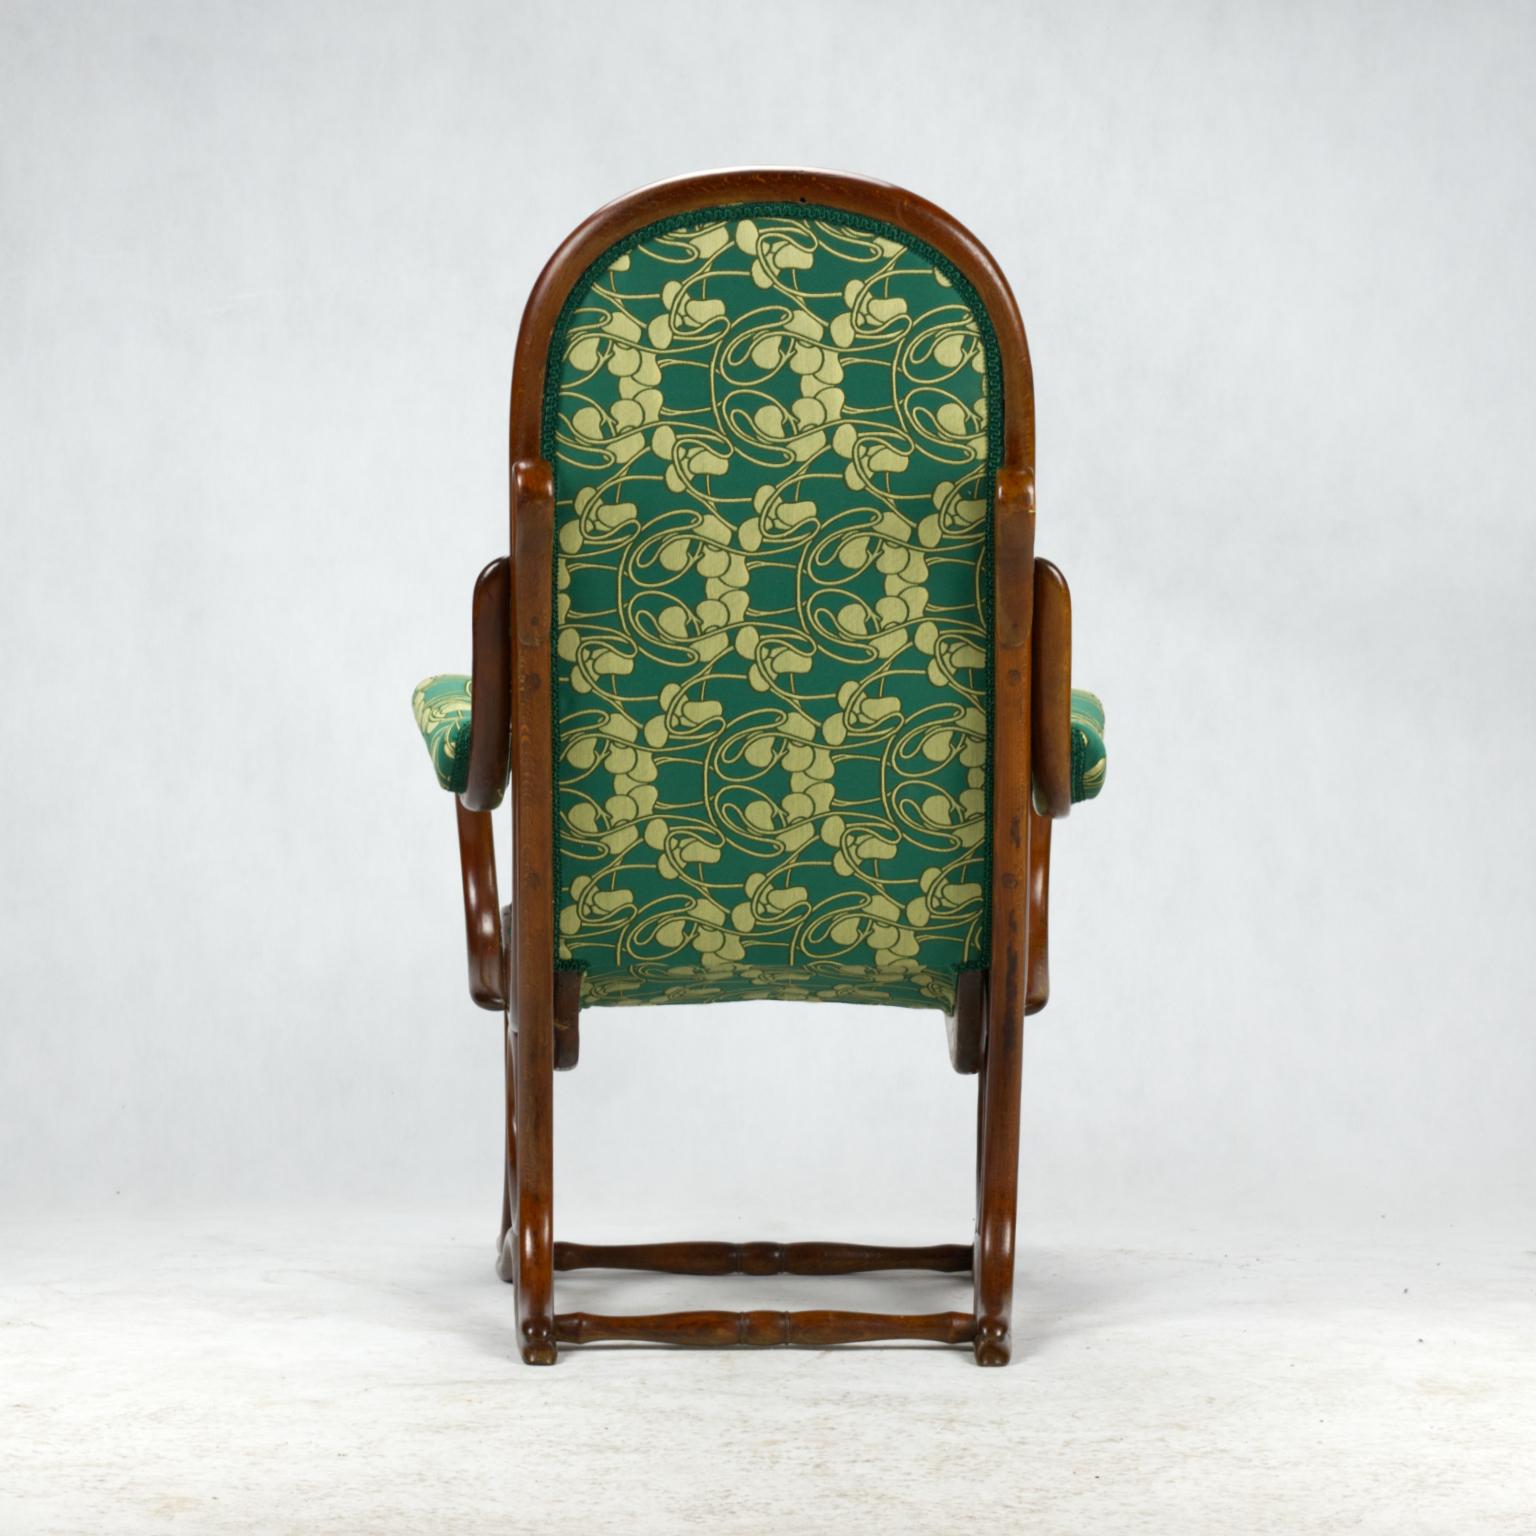 19th Century Art Nouveau Bentwood Salonfauteuil Easy Chair / Armchair Thonet No. 1 circa 1890 For Sale